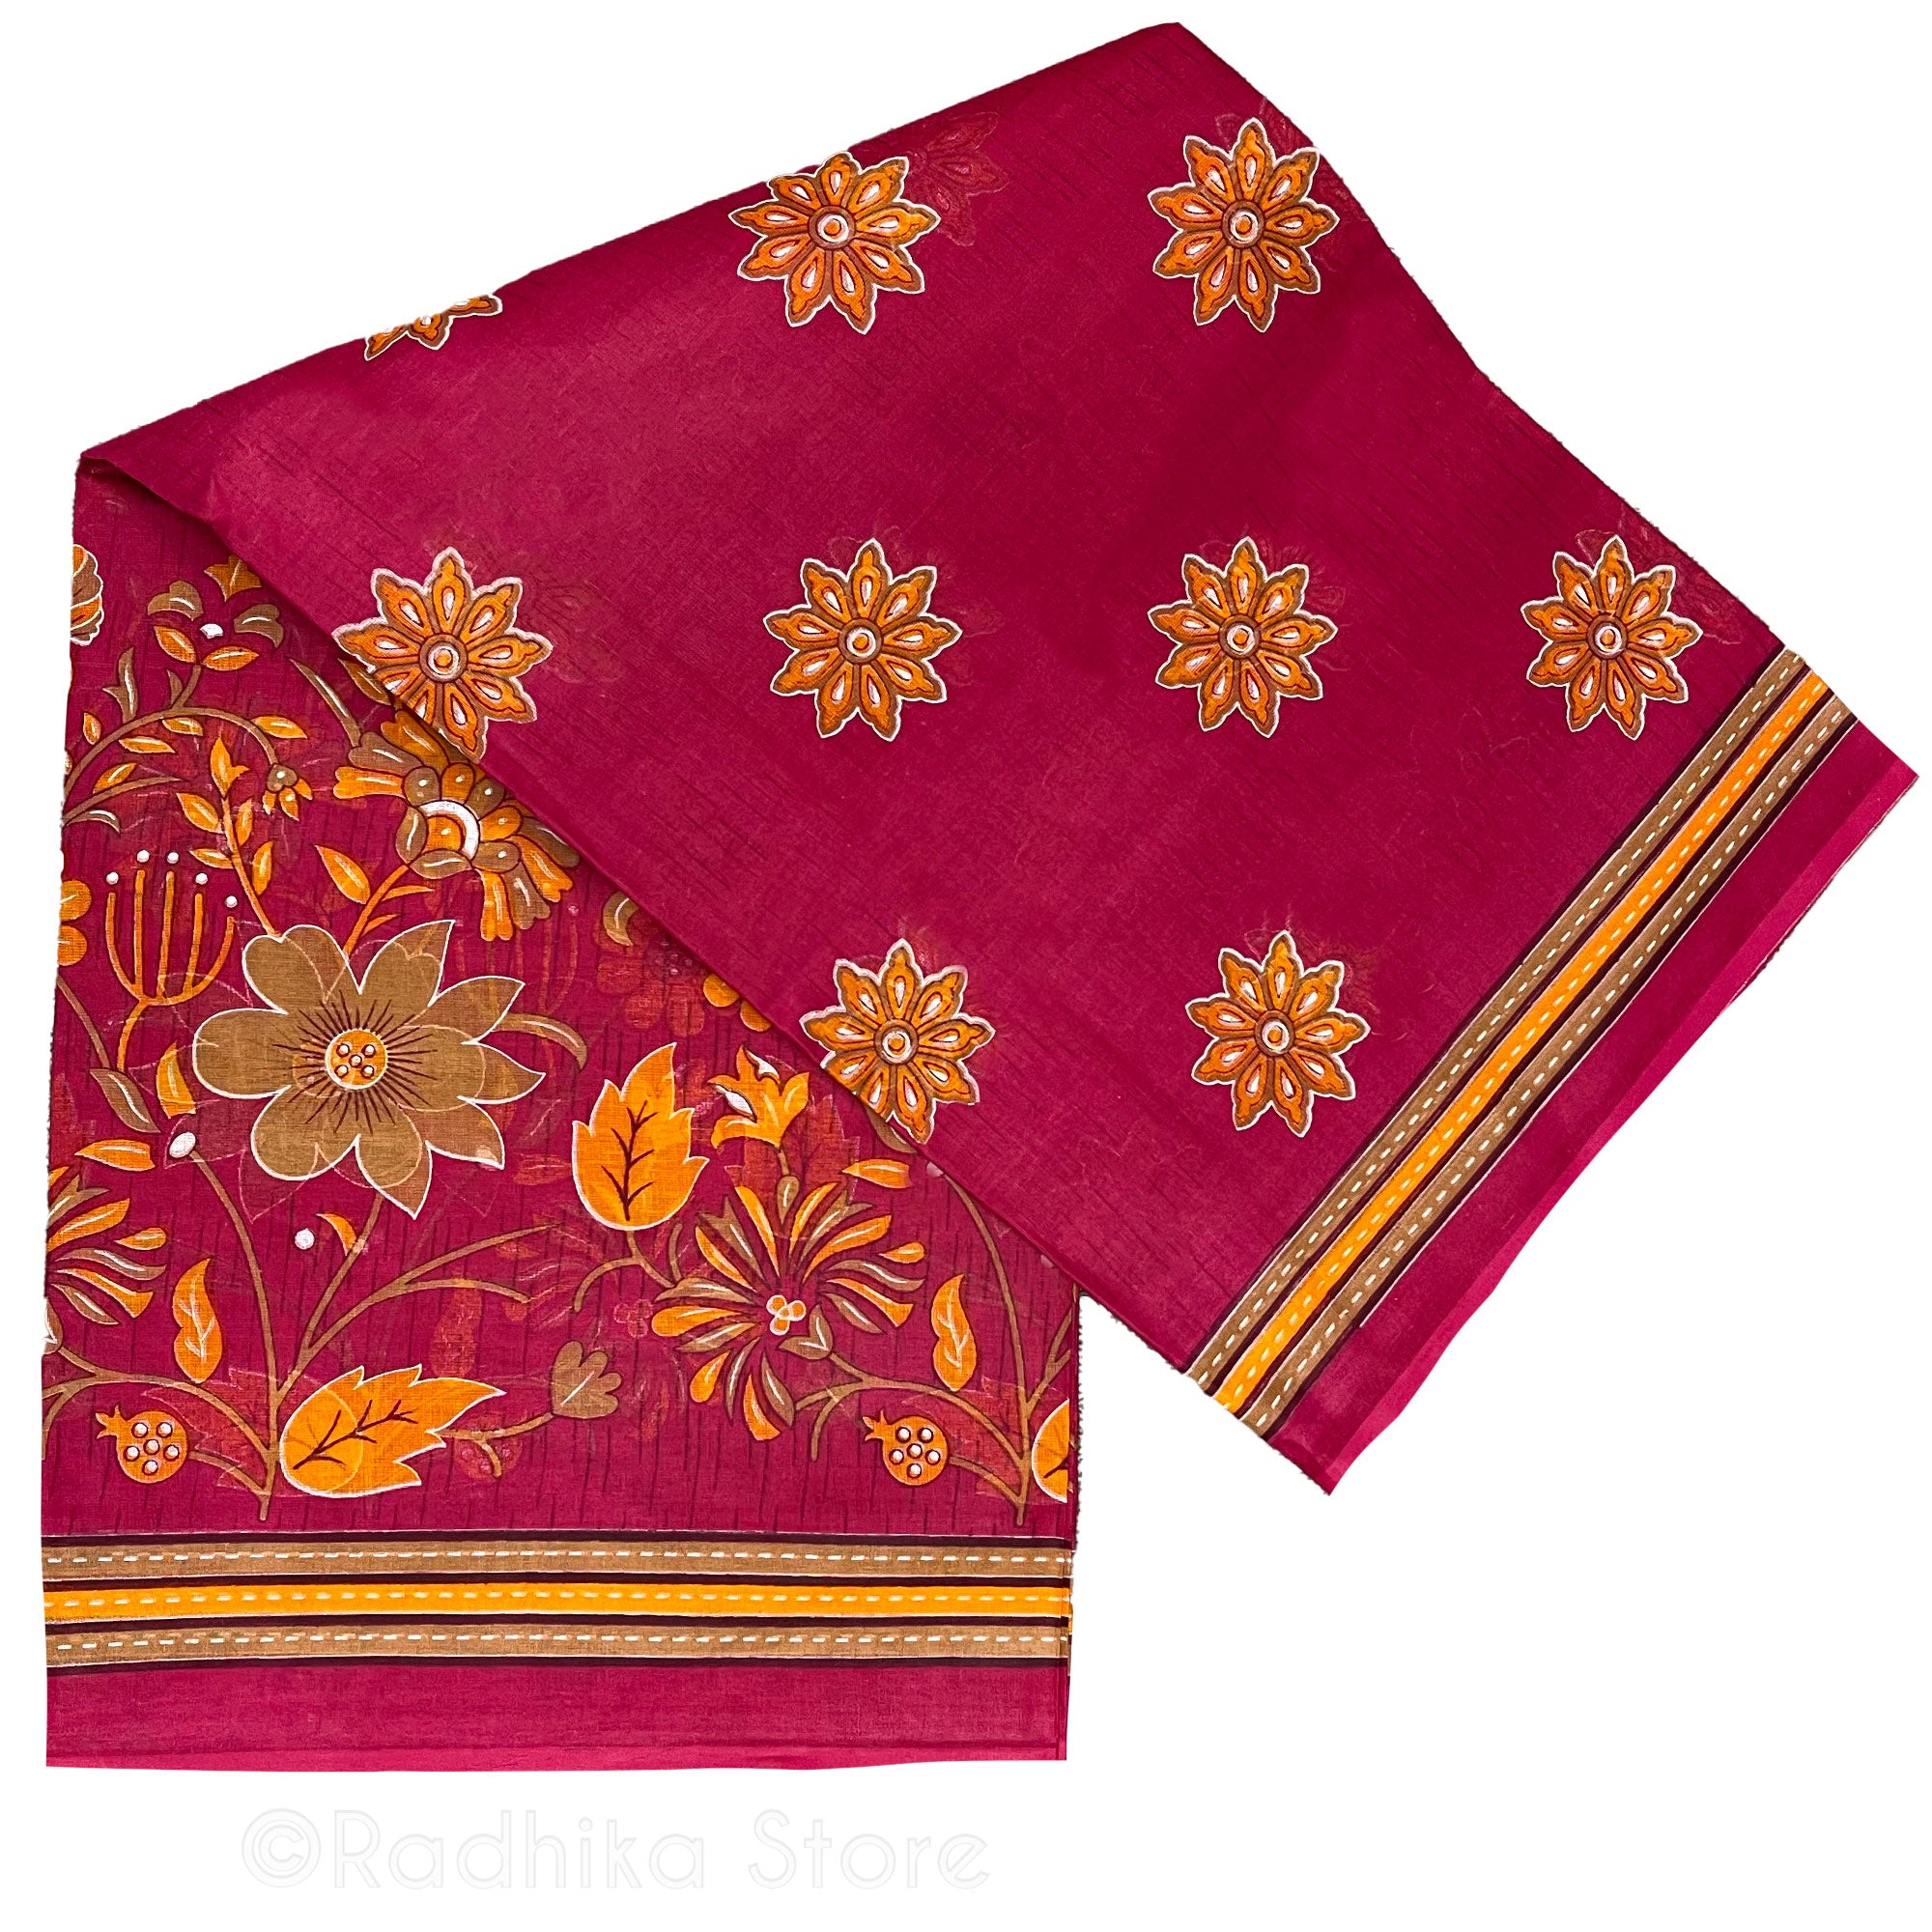 Mayapur Flowers- Printed Cotton Saree - Cranberry and Marigold Colors